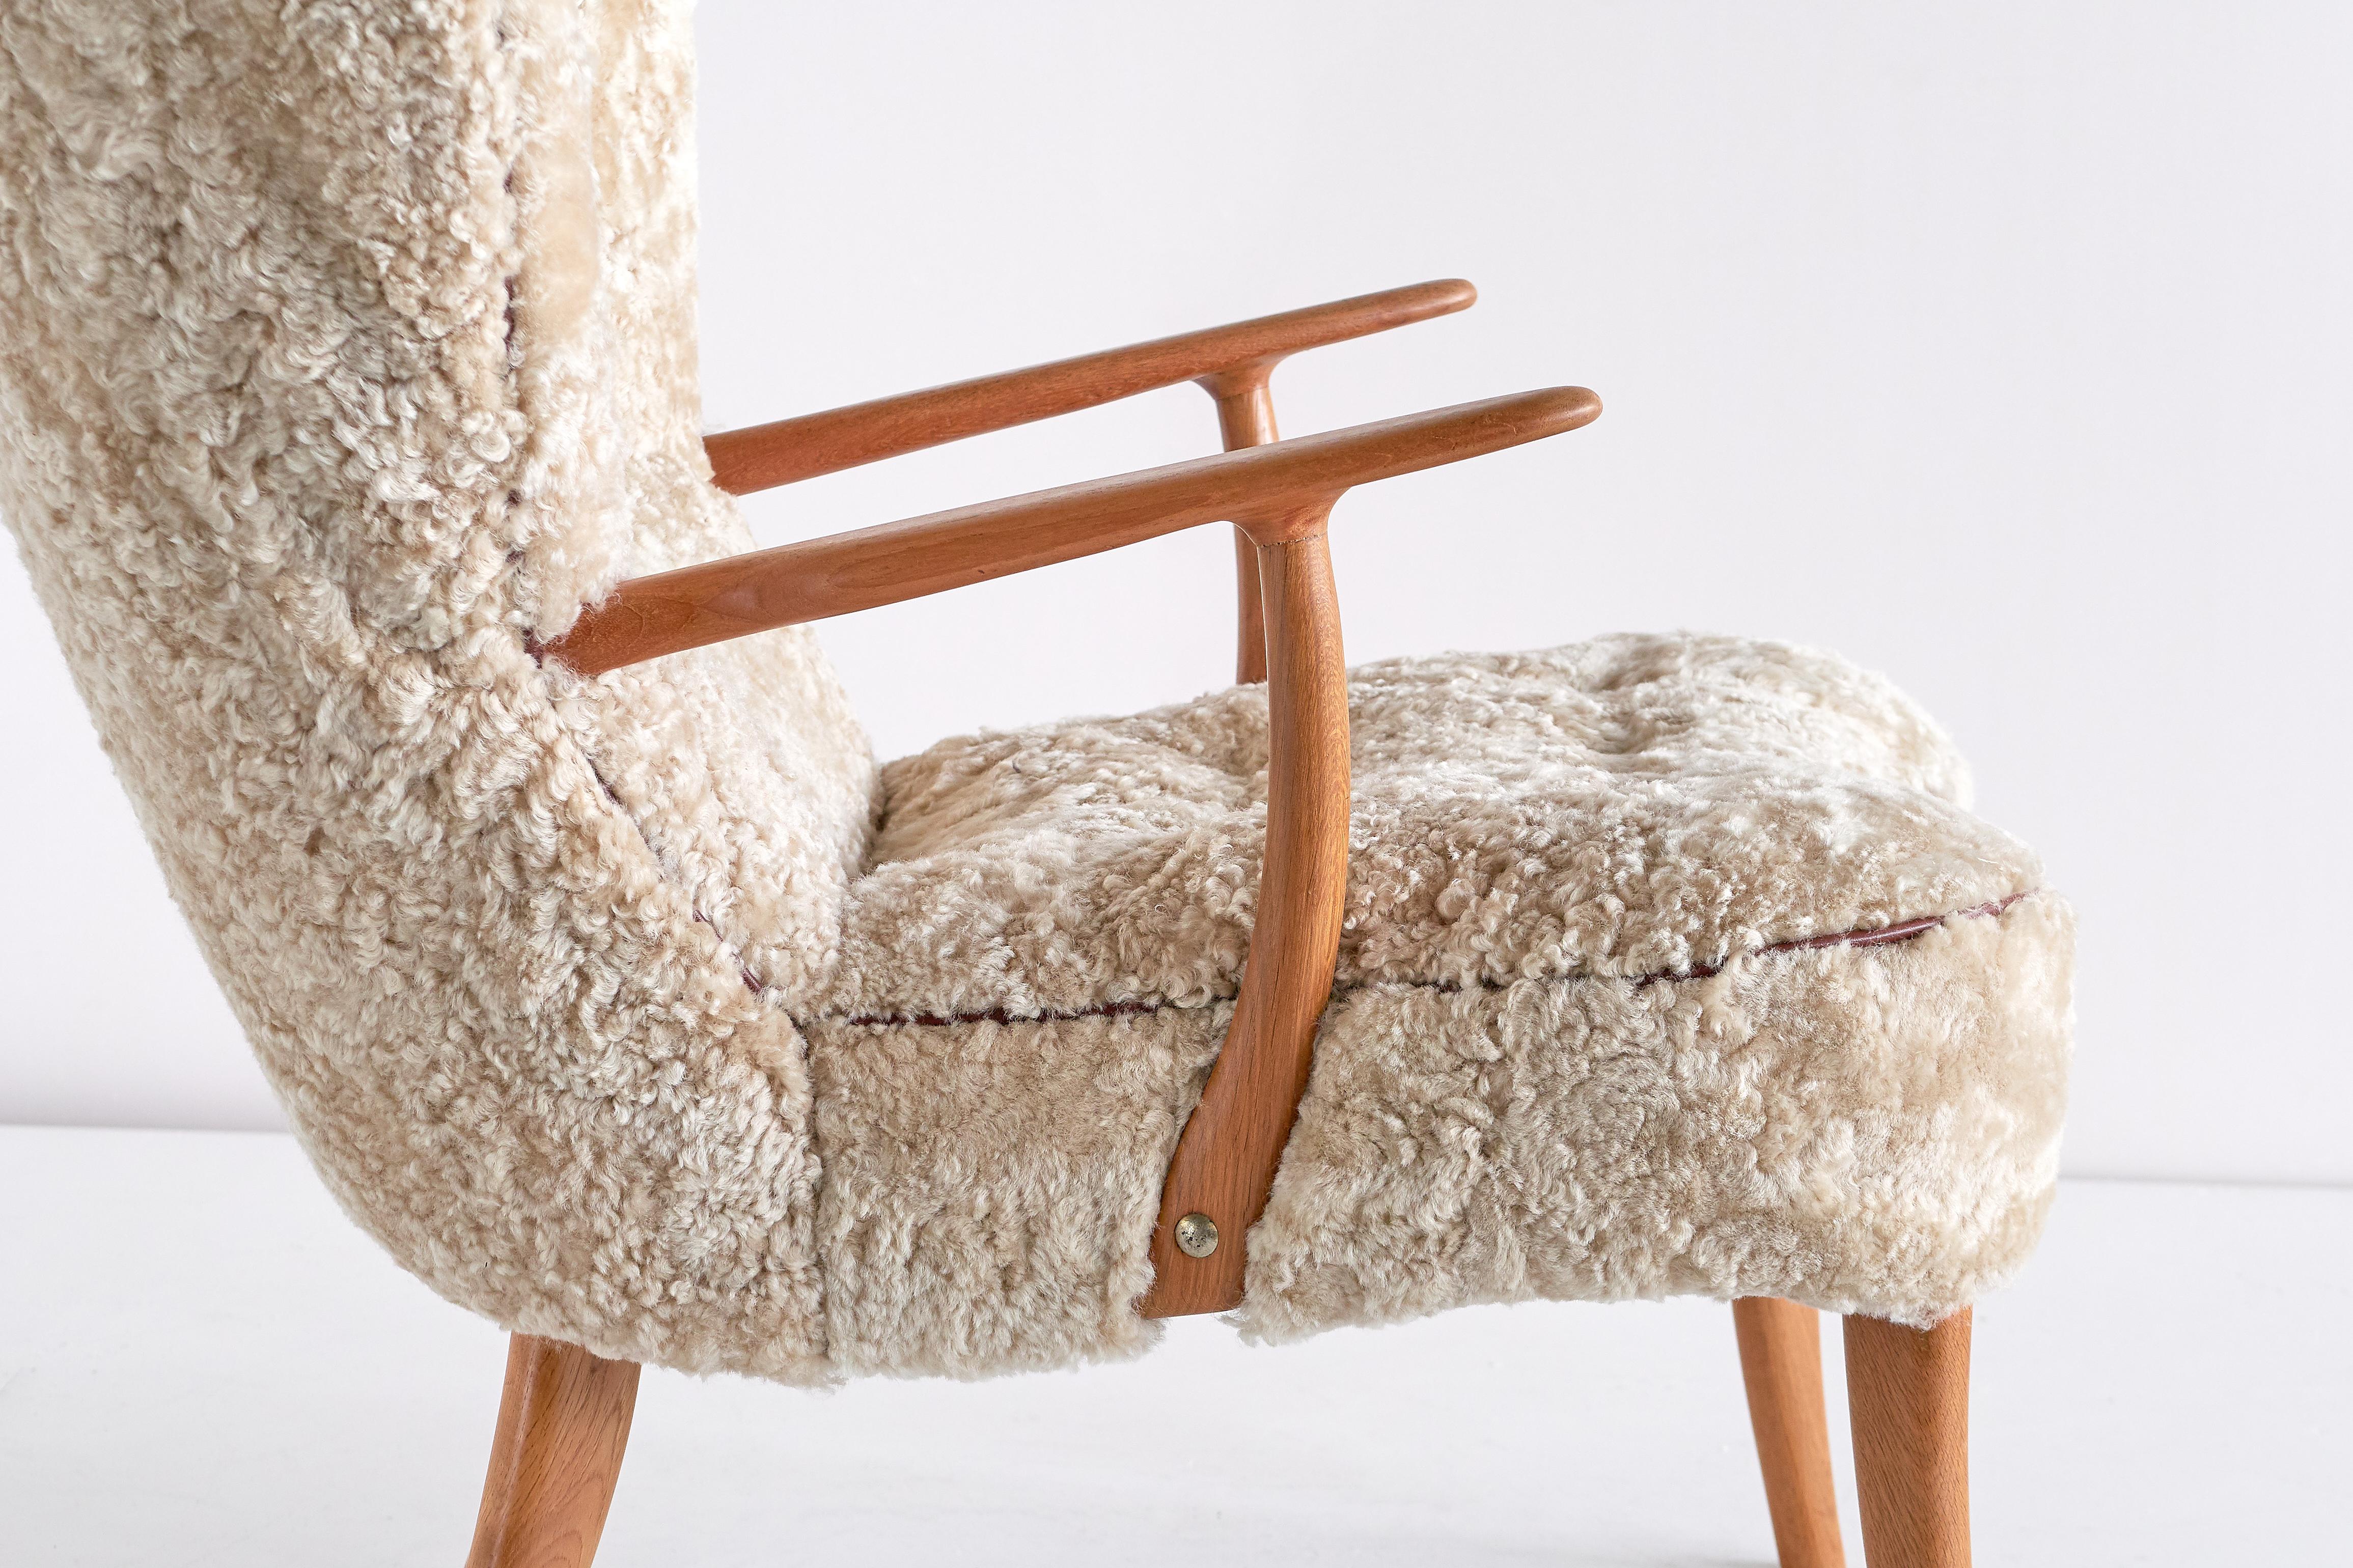 Leather Acton Schubell & Ib Madsen 'Pragh' Wingback Chair in Sheepskin, Denmark, 1950s